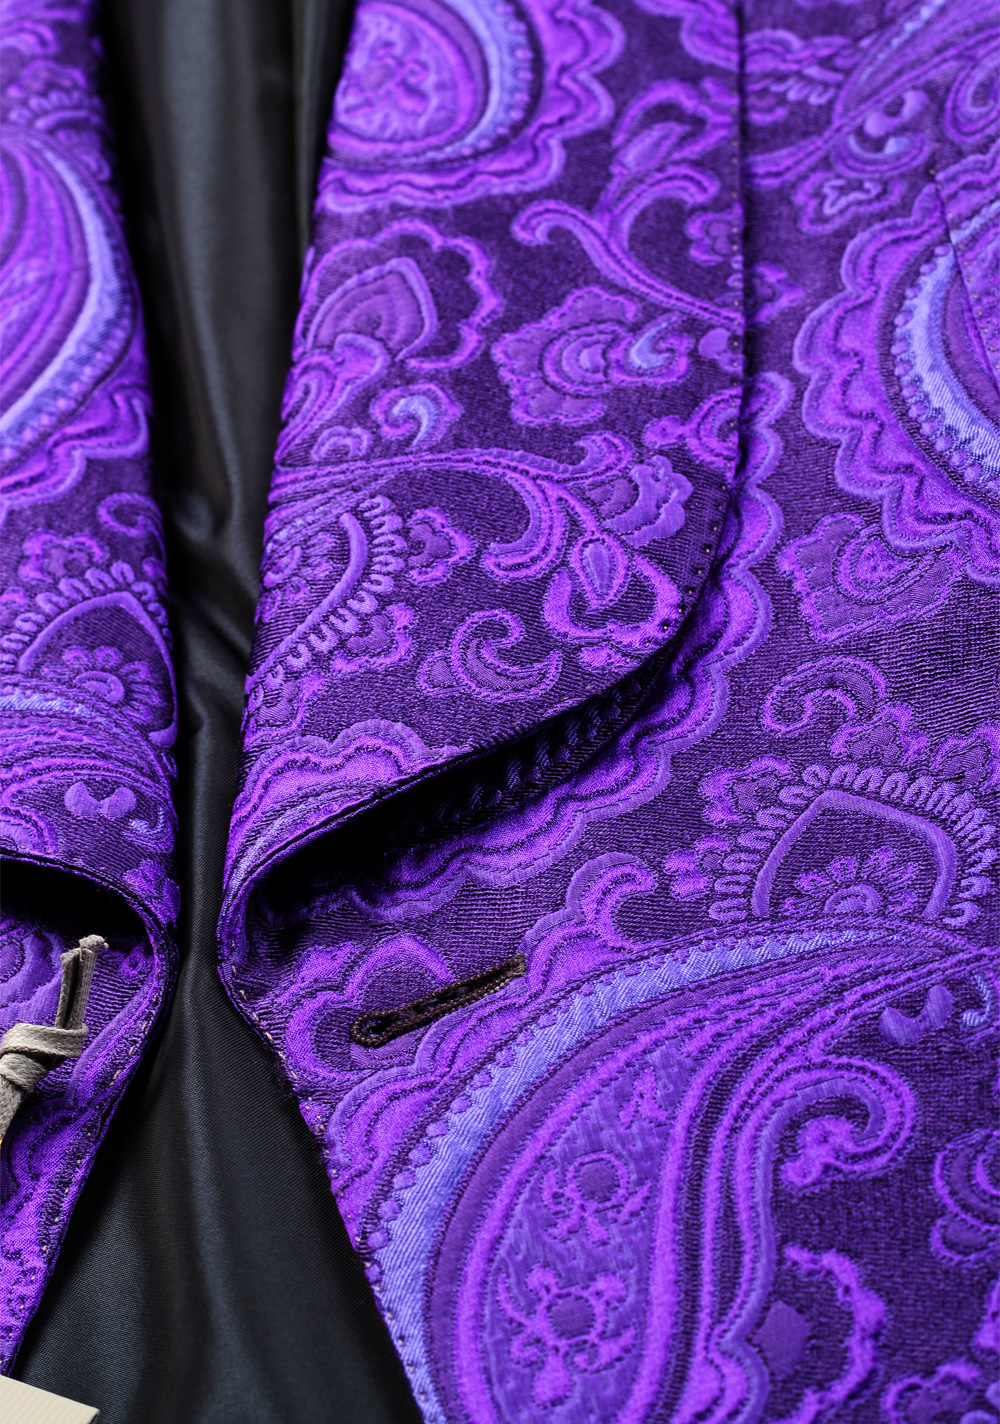 TOM FORD Purple Sport Coat Tuxedo Dinner Jacket Size 48 / 38R U.S. Fit Z | Costume Limité